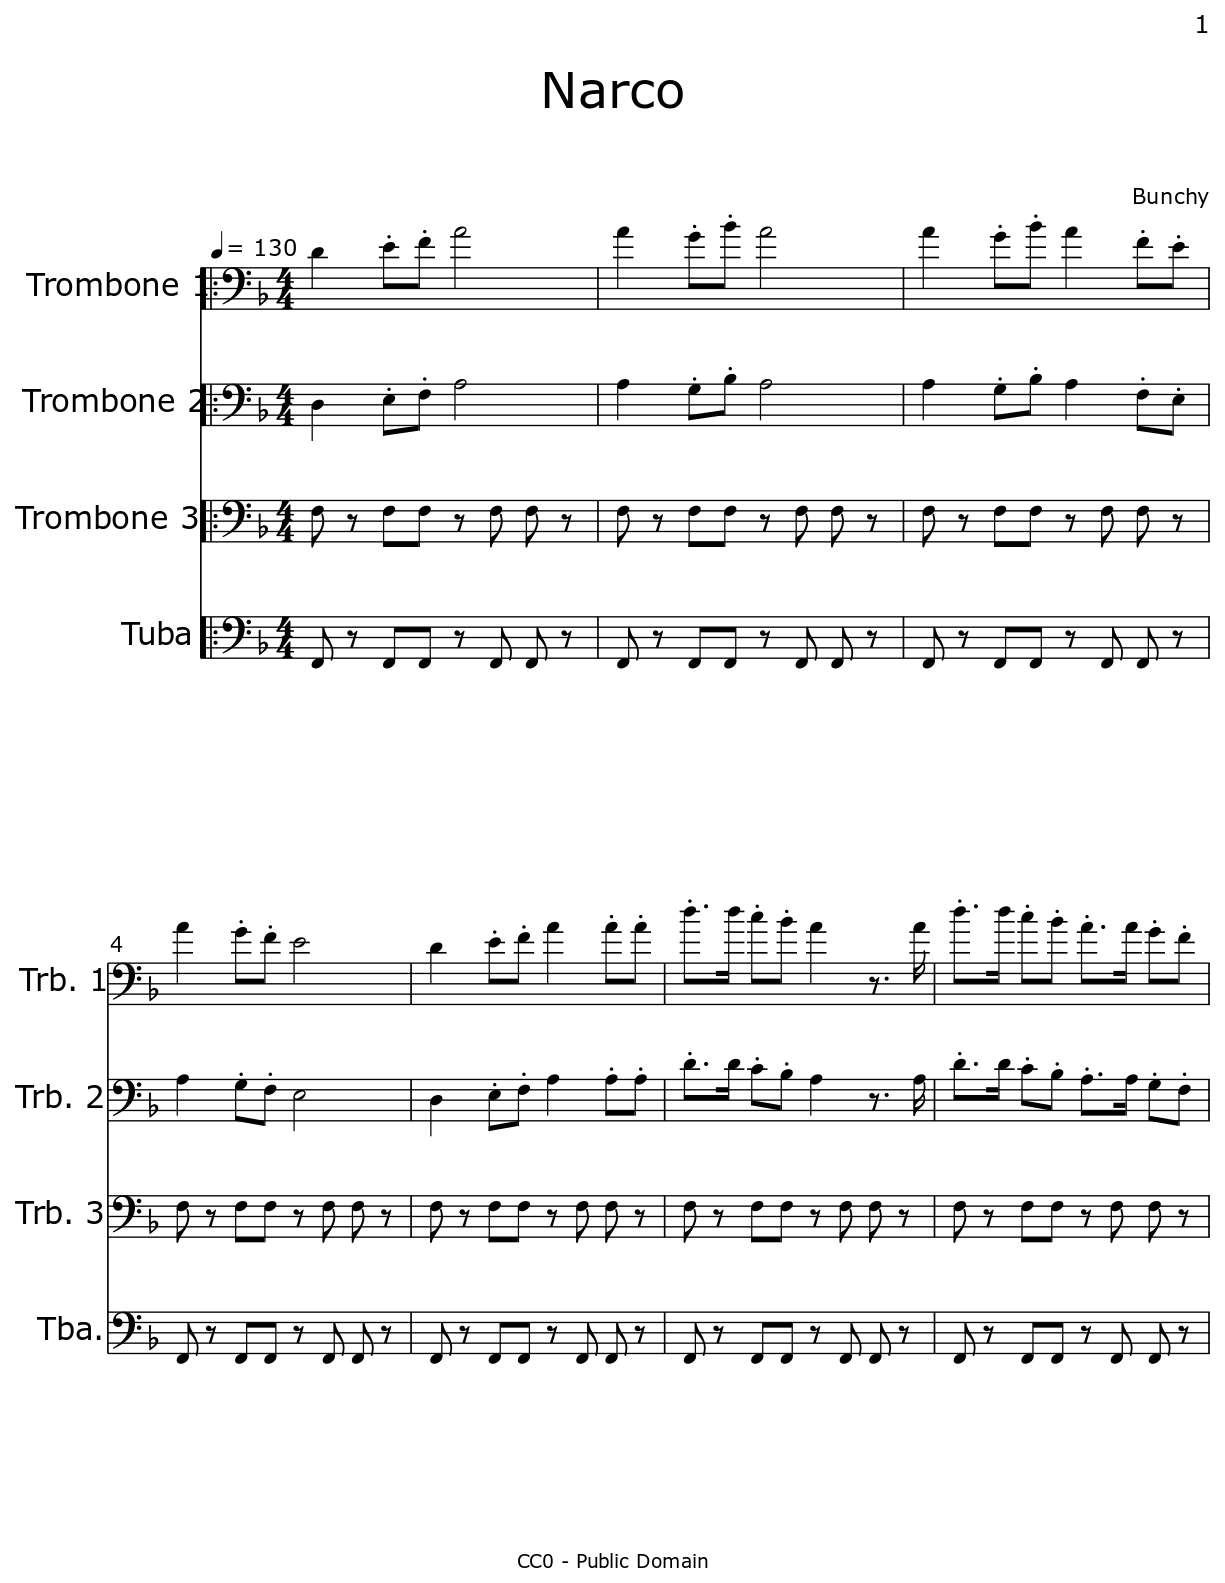 Narco - Sheet music for Trombone, Tuba